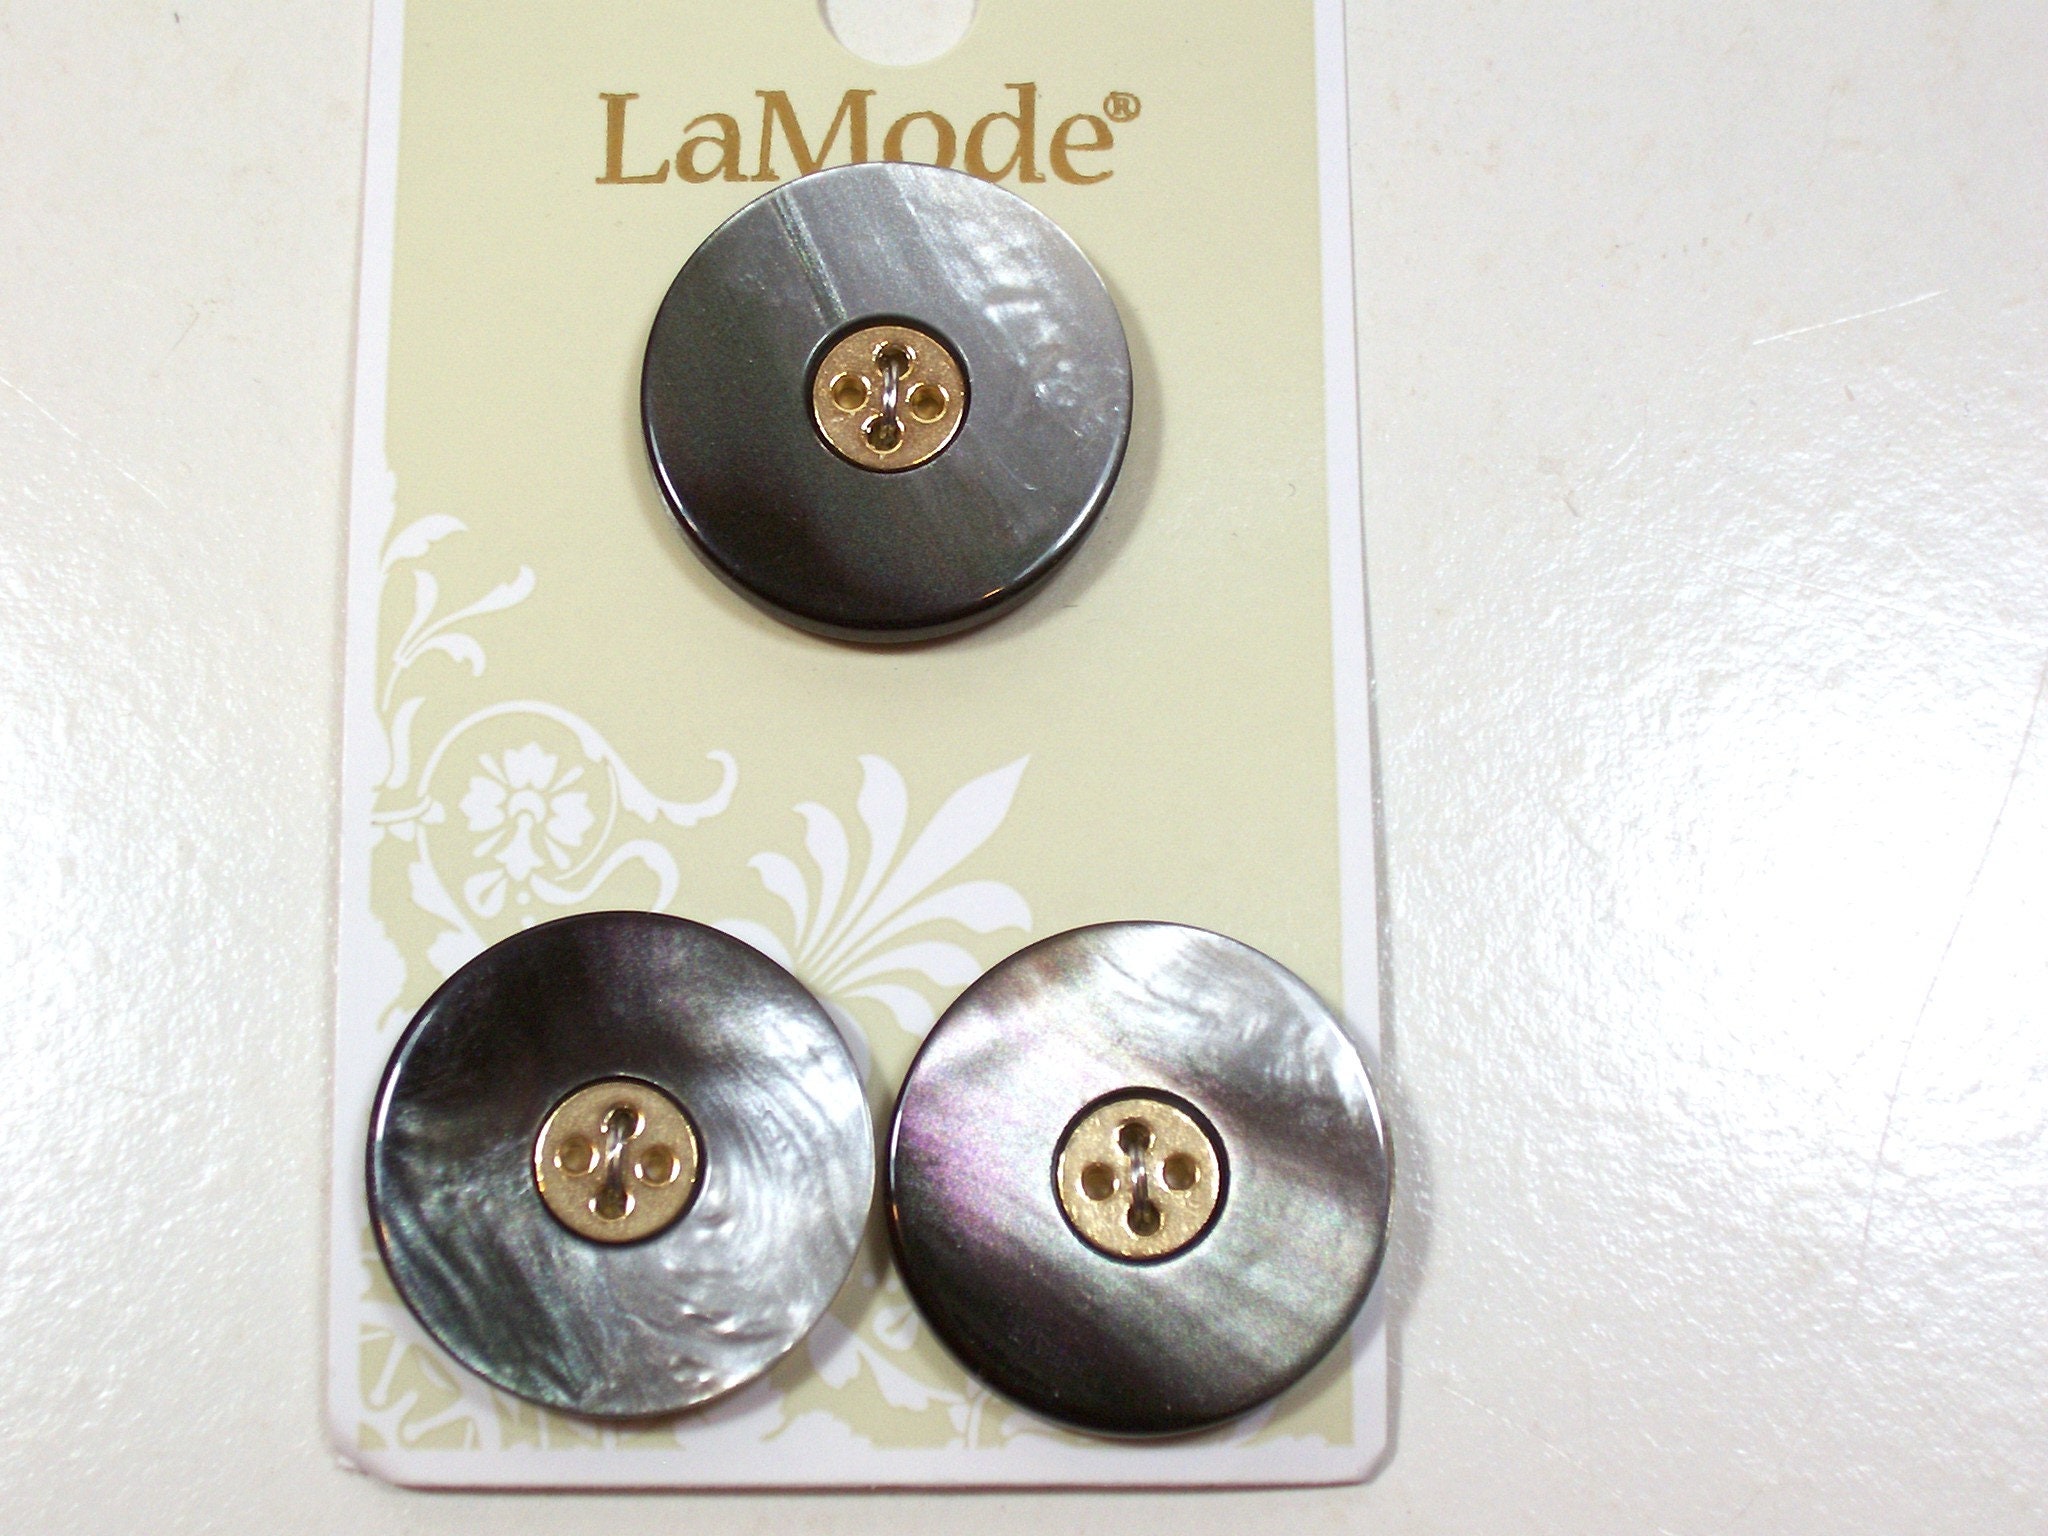 Le Bouton Tan 7/8 4-Hole Wood Buttons, 2 Pieces 